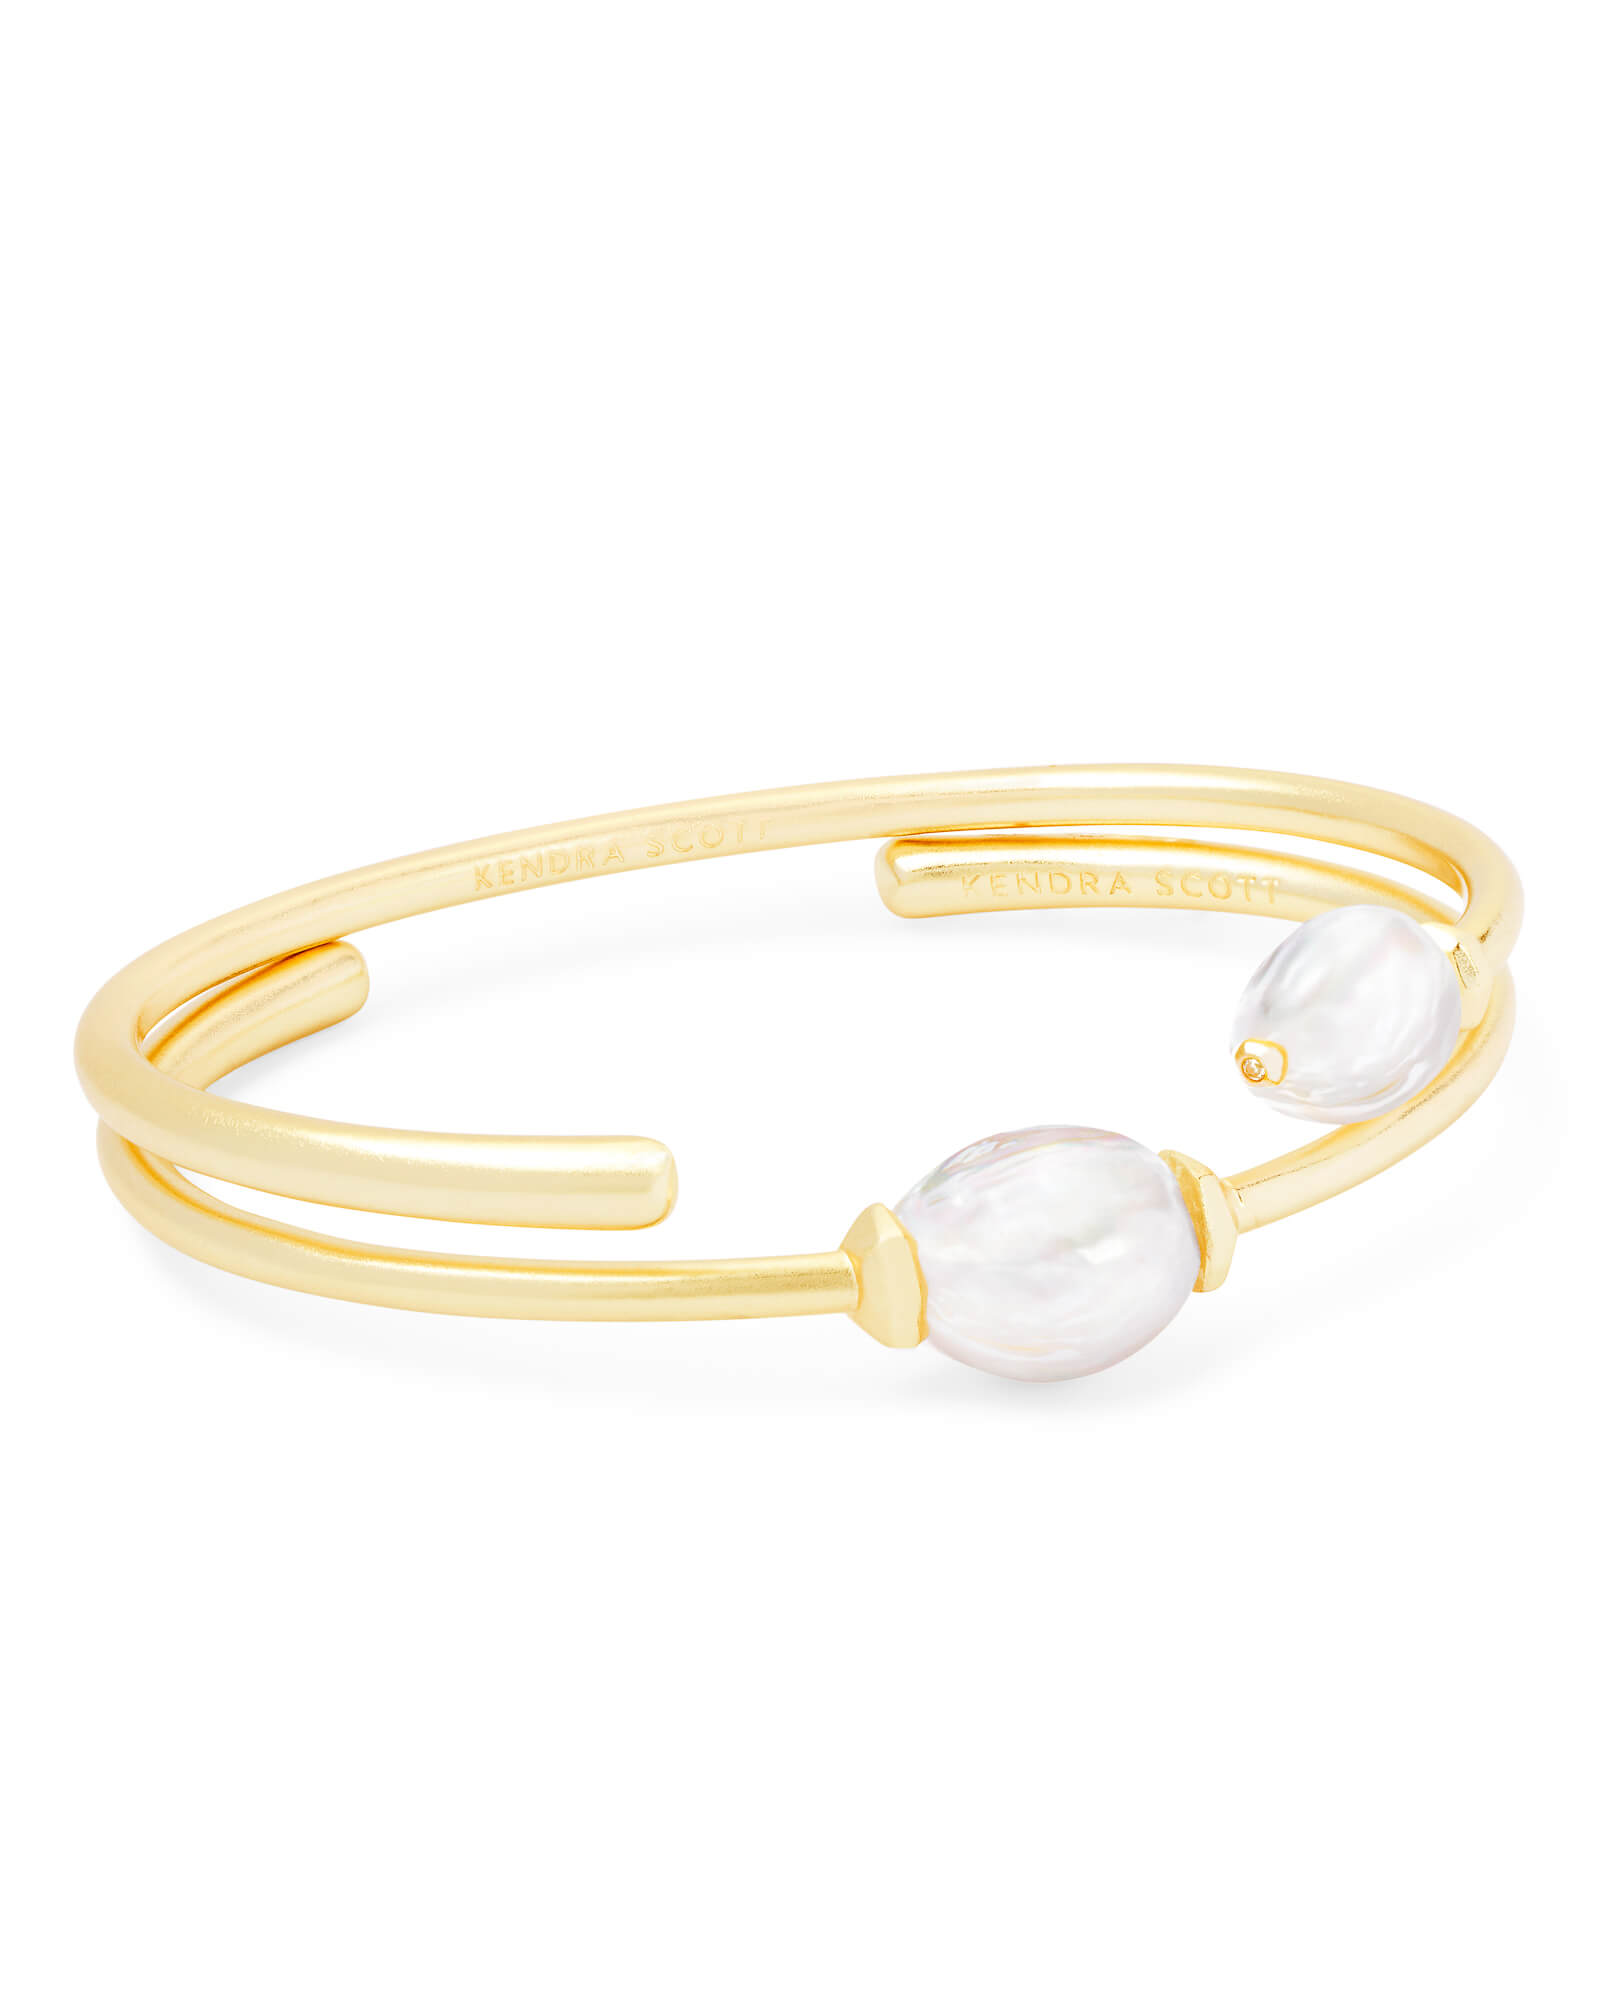 Kendra Scott Amiya Gold Cuff Bracelet in Pearl